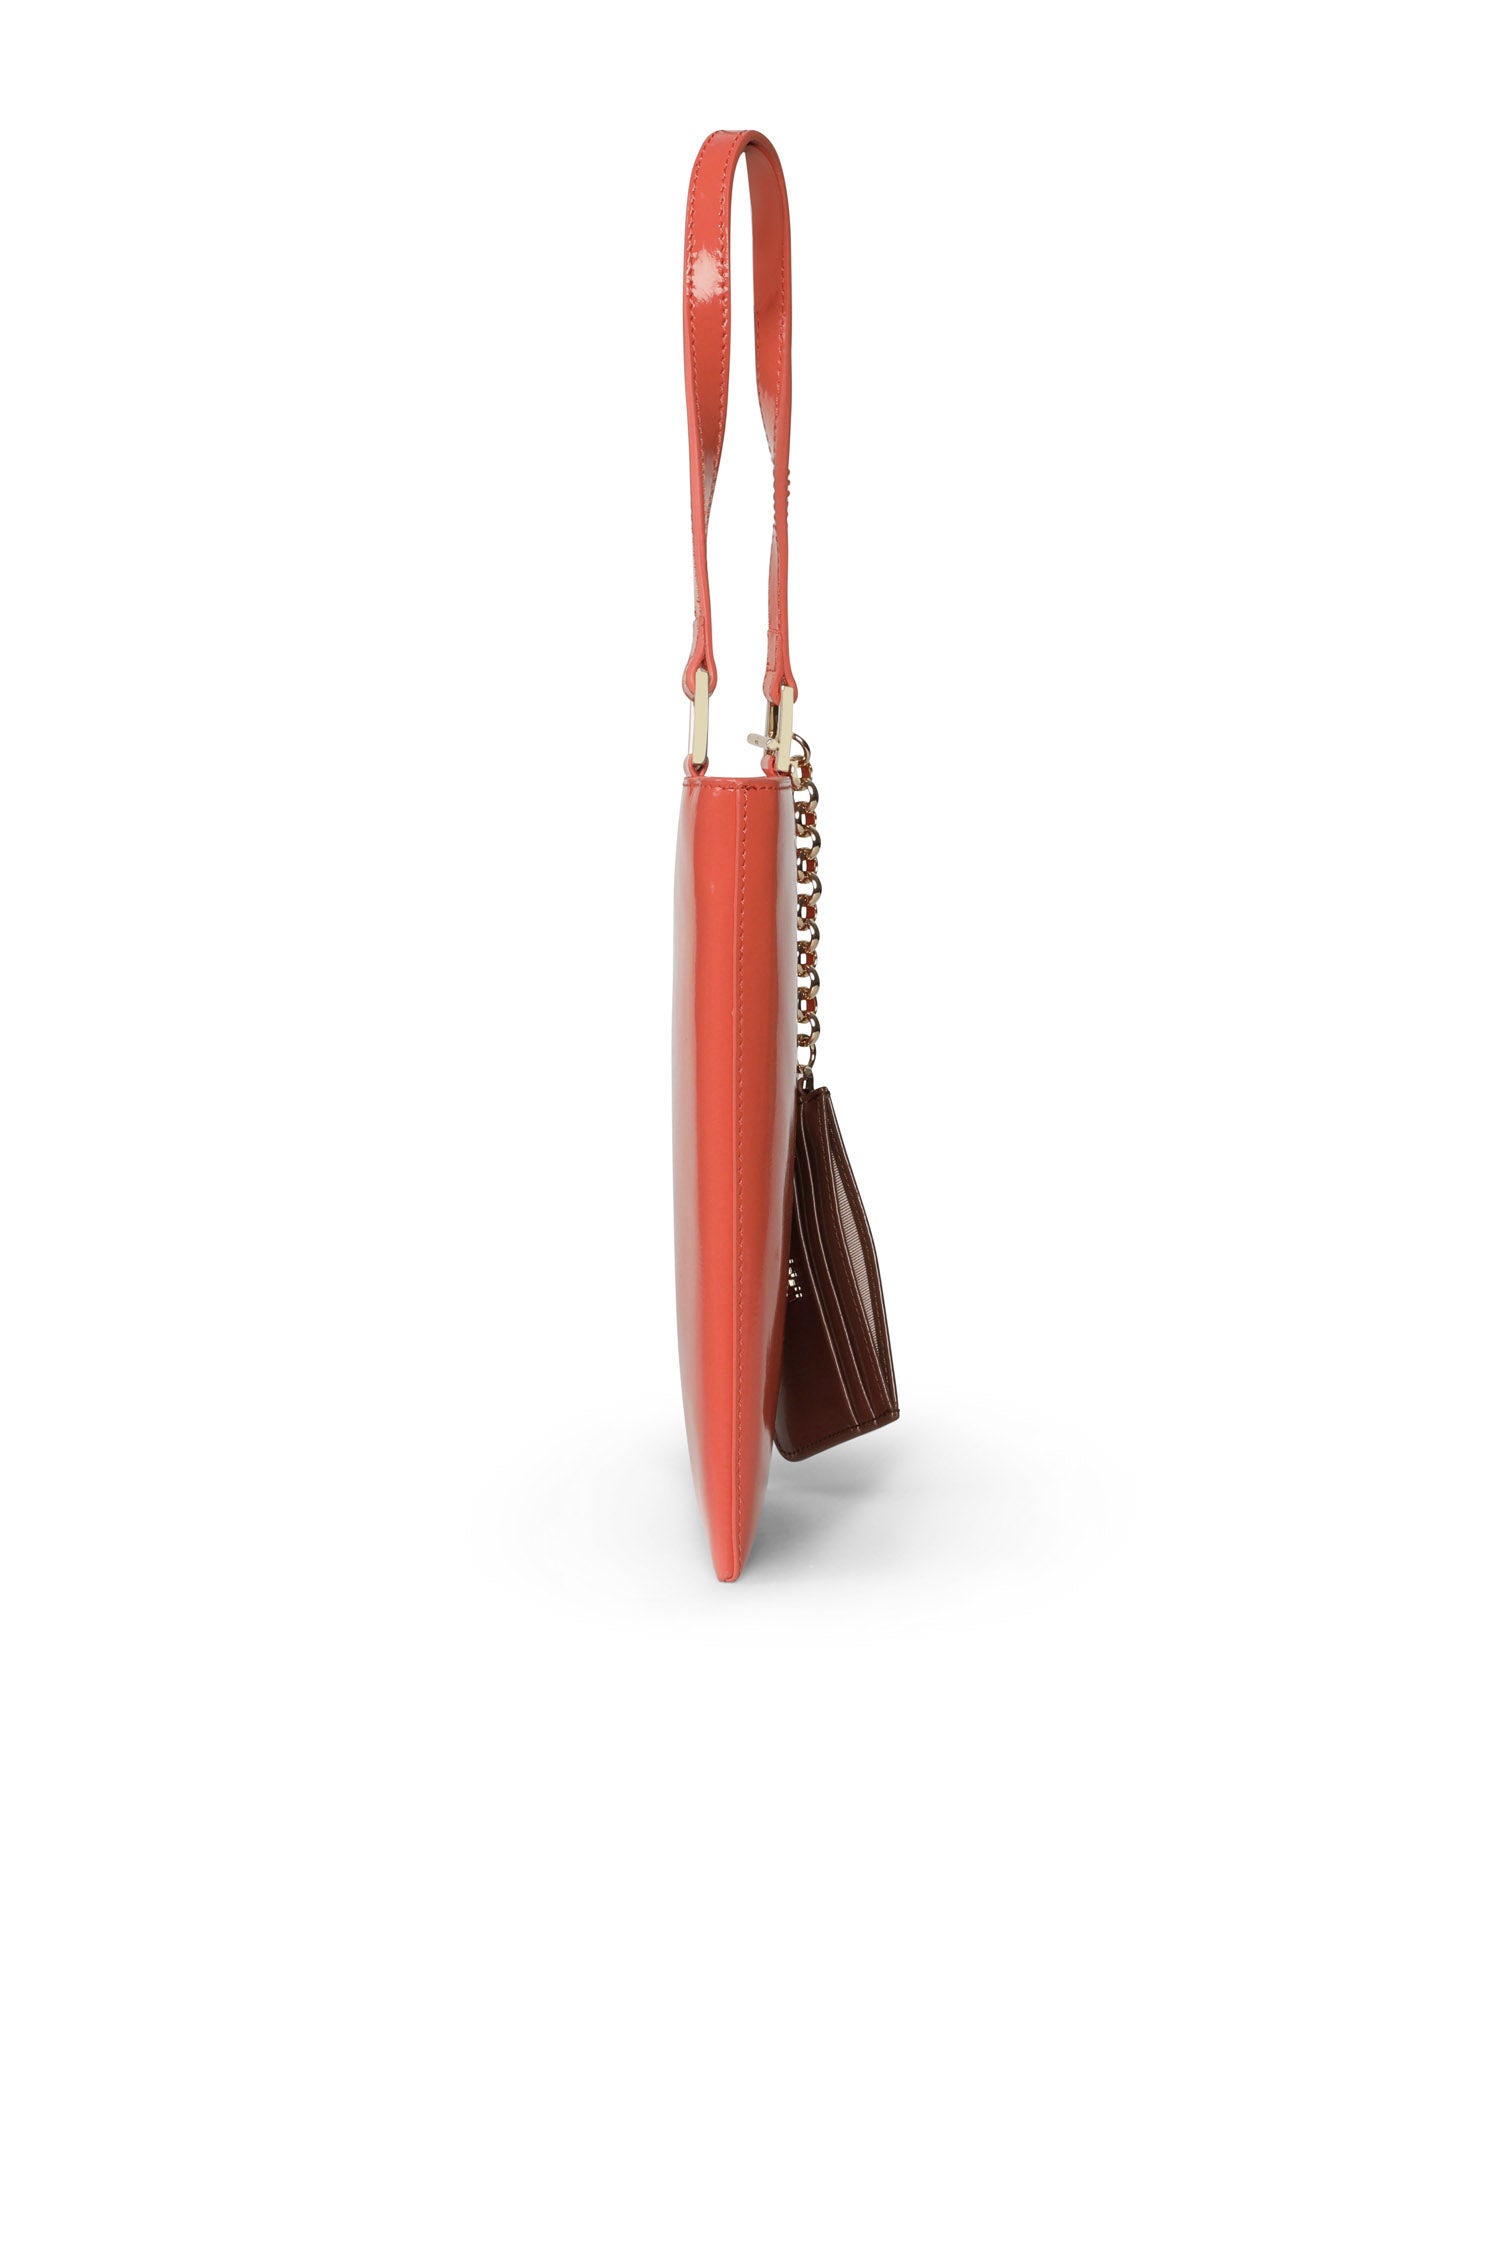 SAMPLE - The Ella Patent Phone Bag Orange sunset